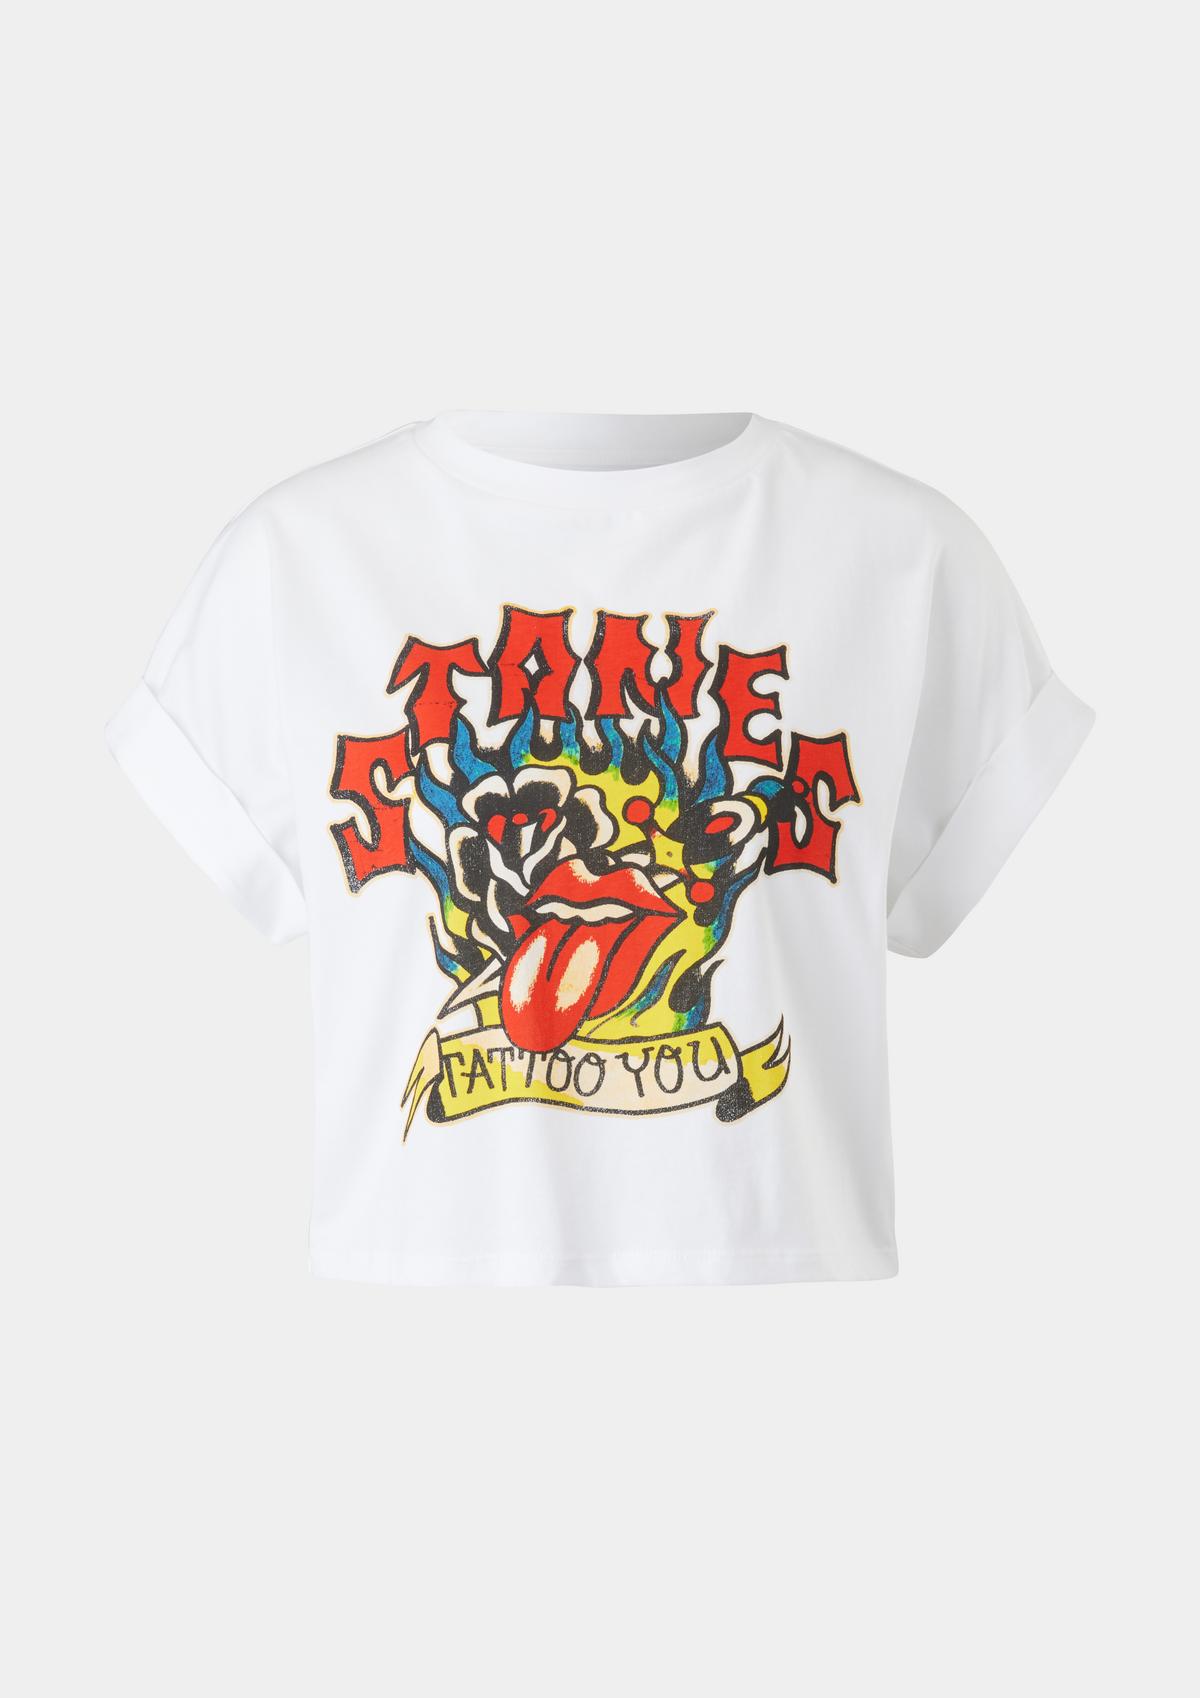 s.Oliver T-Shirt mit The Rolling Stones-Motiv